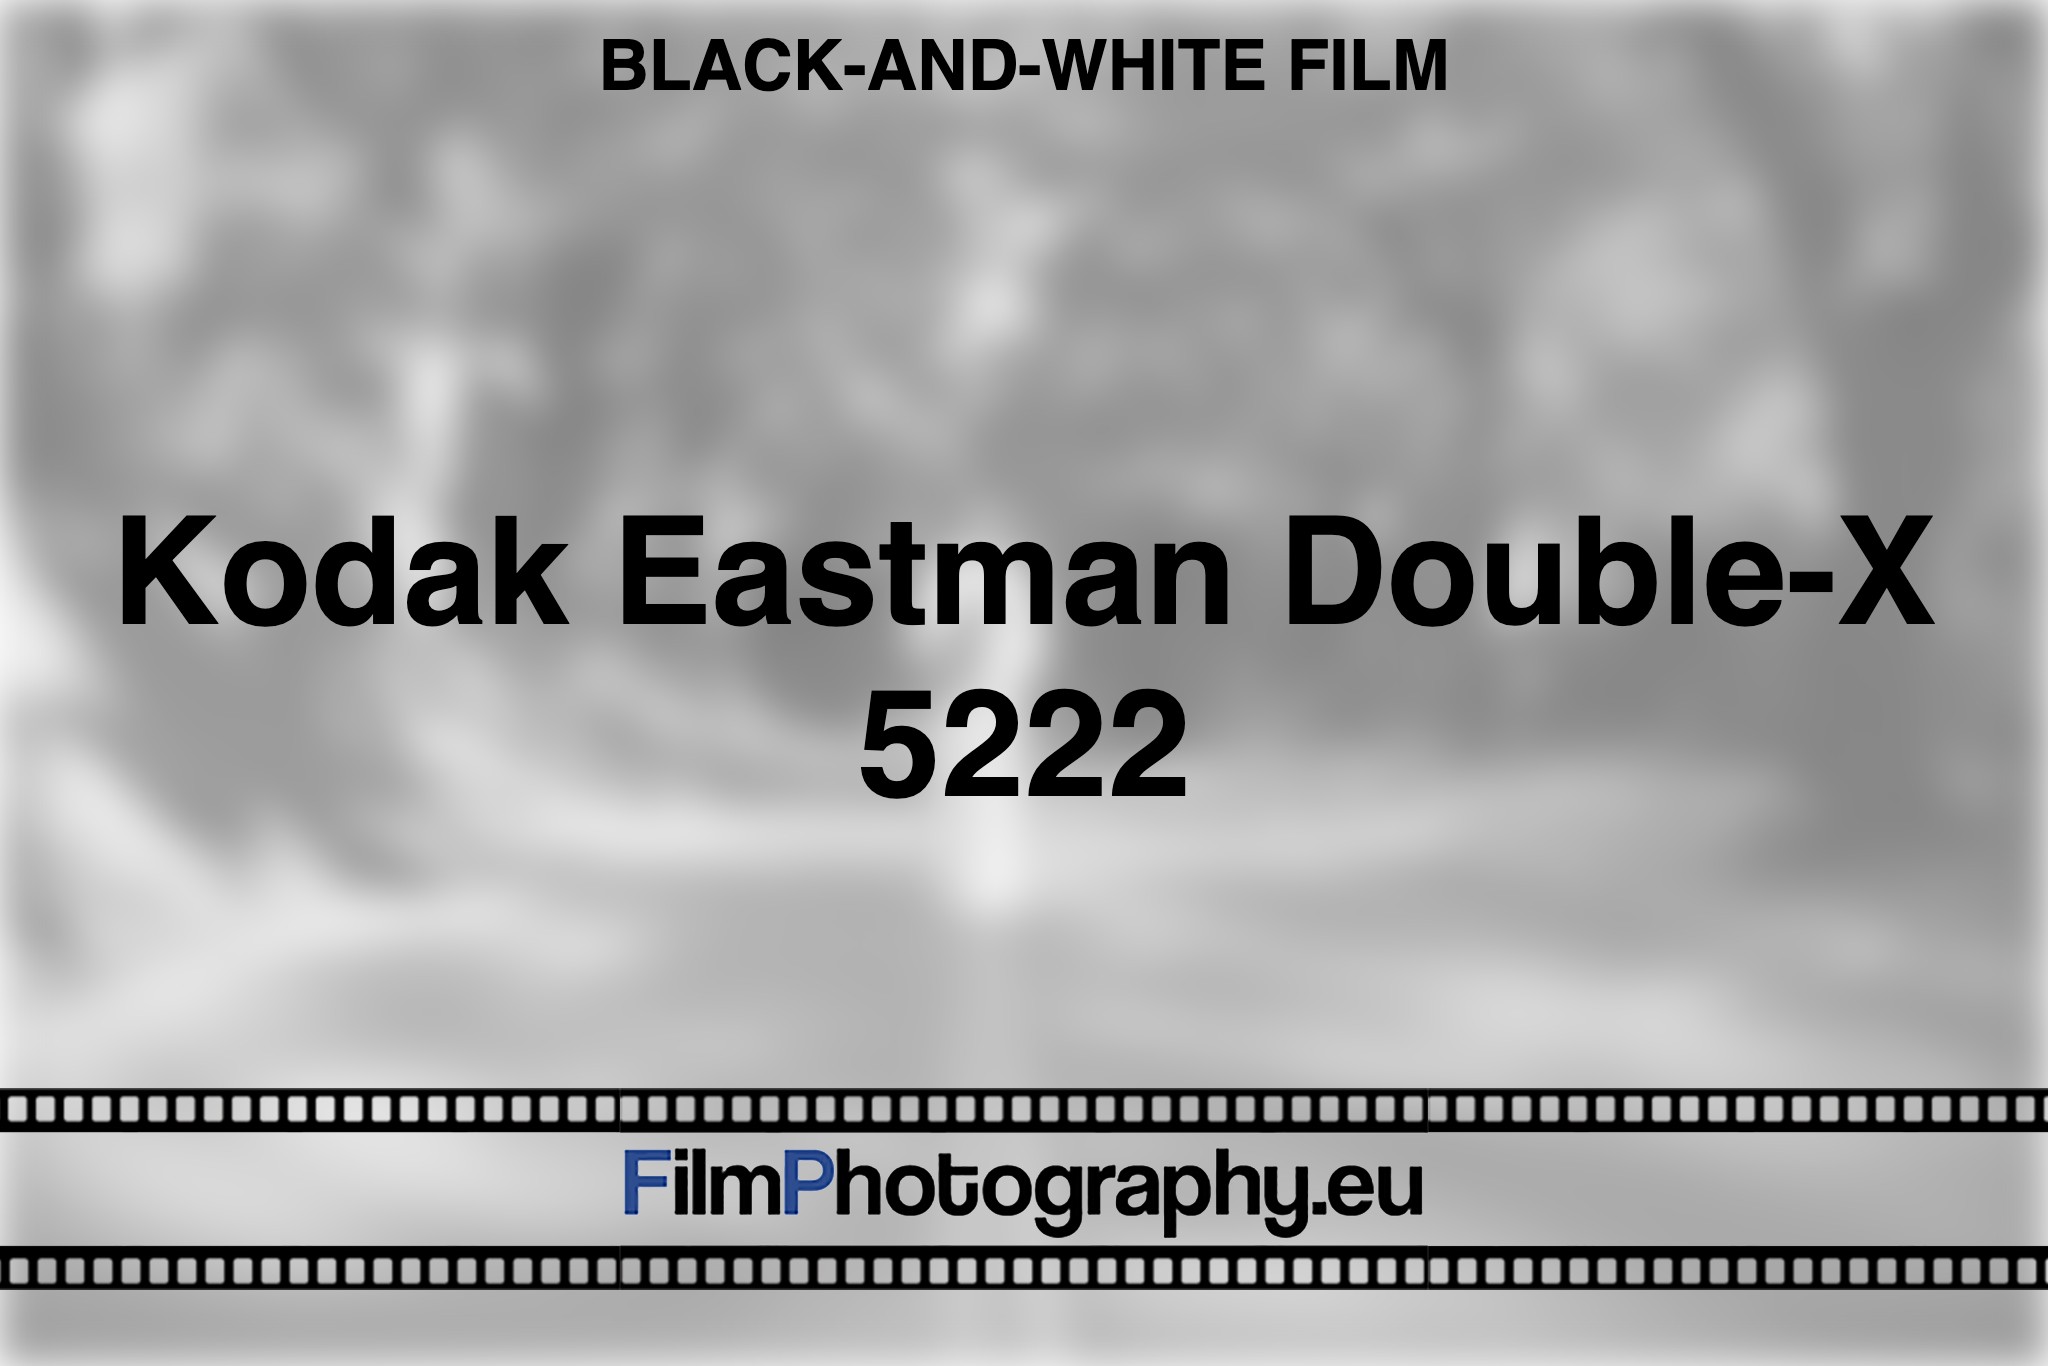 Eastman Kodak Double-X (5222) - a Cinematic Black and White Film